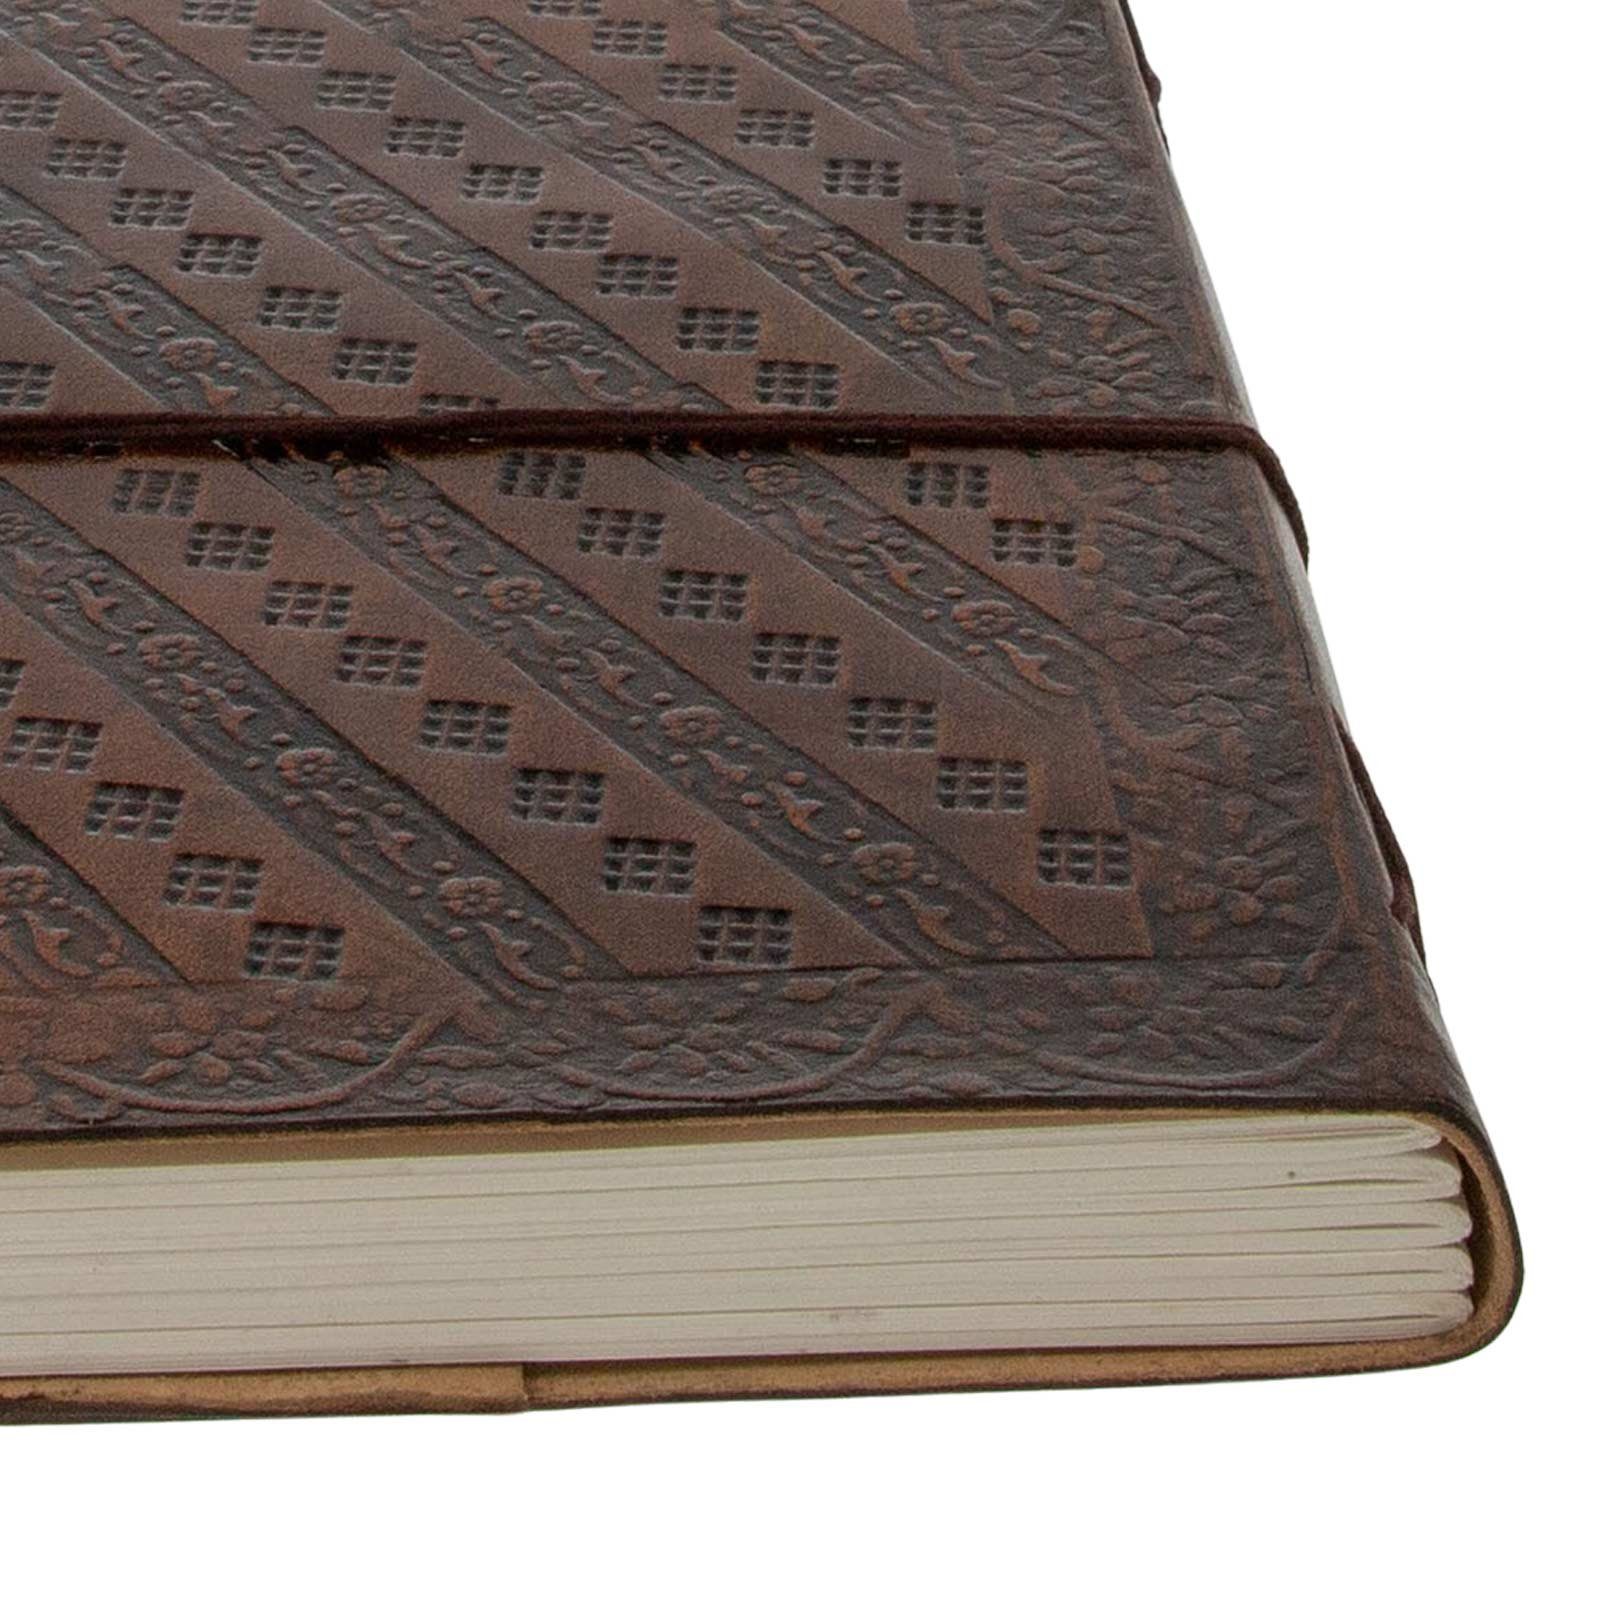 Lord Ganesha handgefertigt Leder Tagebuch KUNST UND 11,5x15cm Tagebuch Notizbuch MAGIE